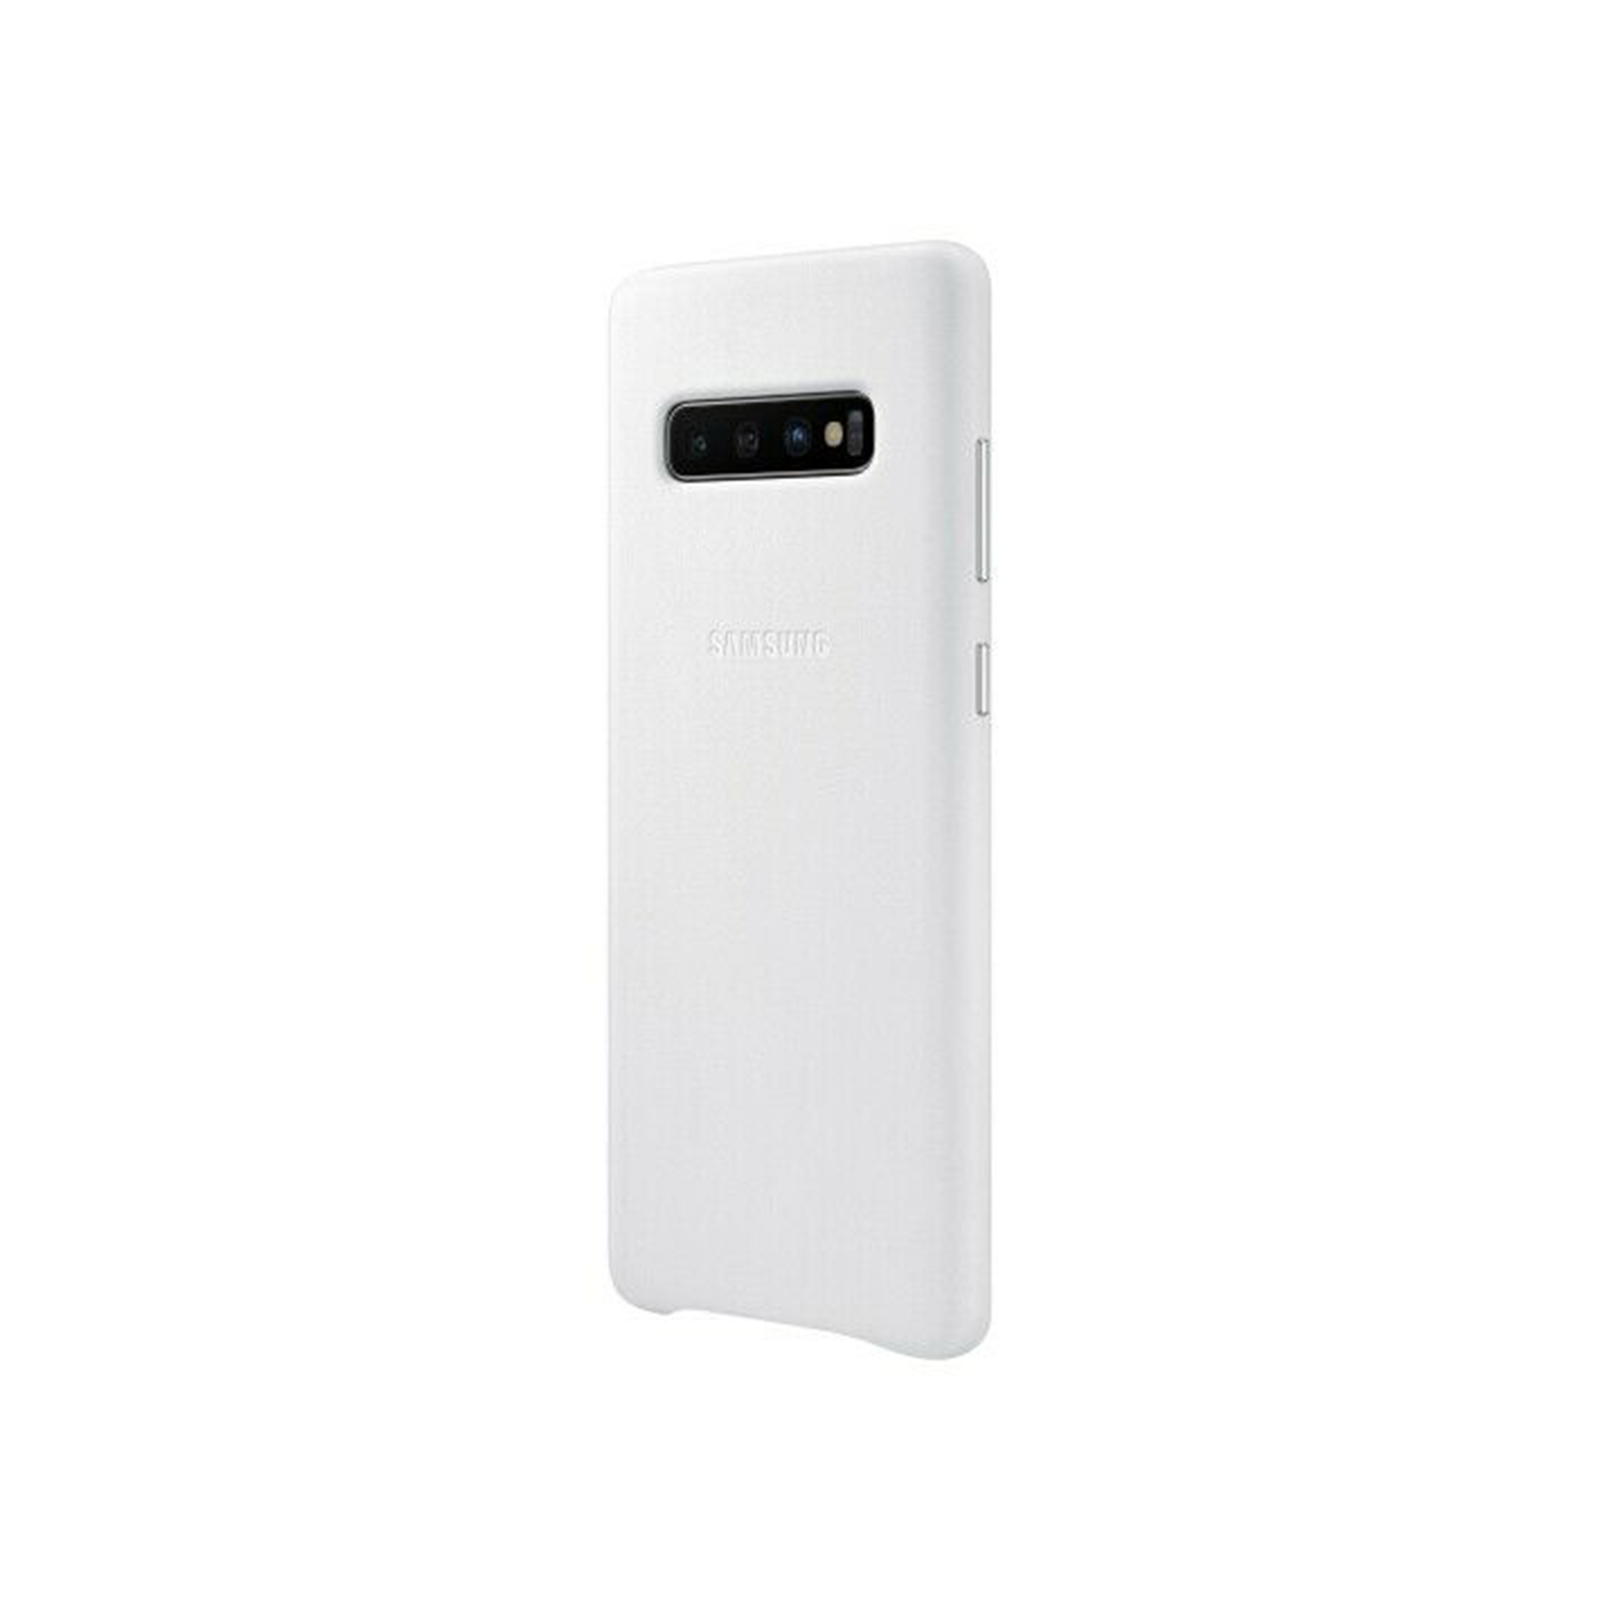 Backcover, LEATHER S10+, EF-VG975LWEGWW Weiß Galaxy WHITE, COVER SAMSUNG S10+ Samsung,